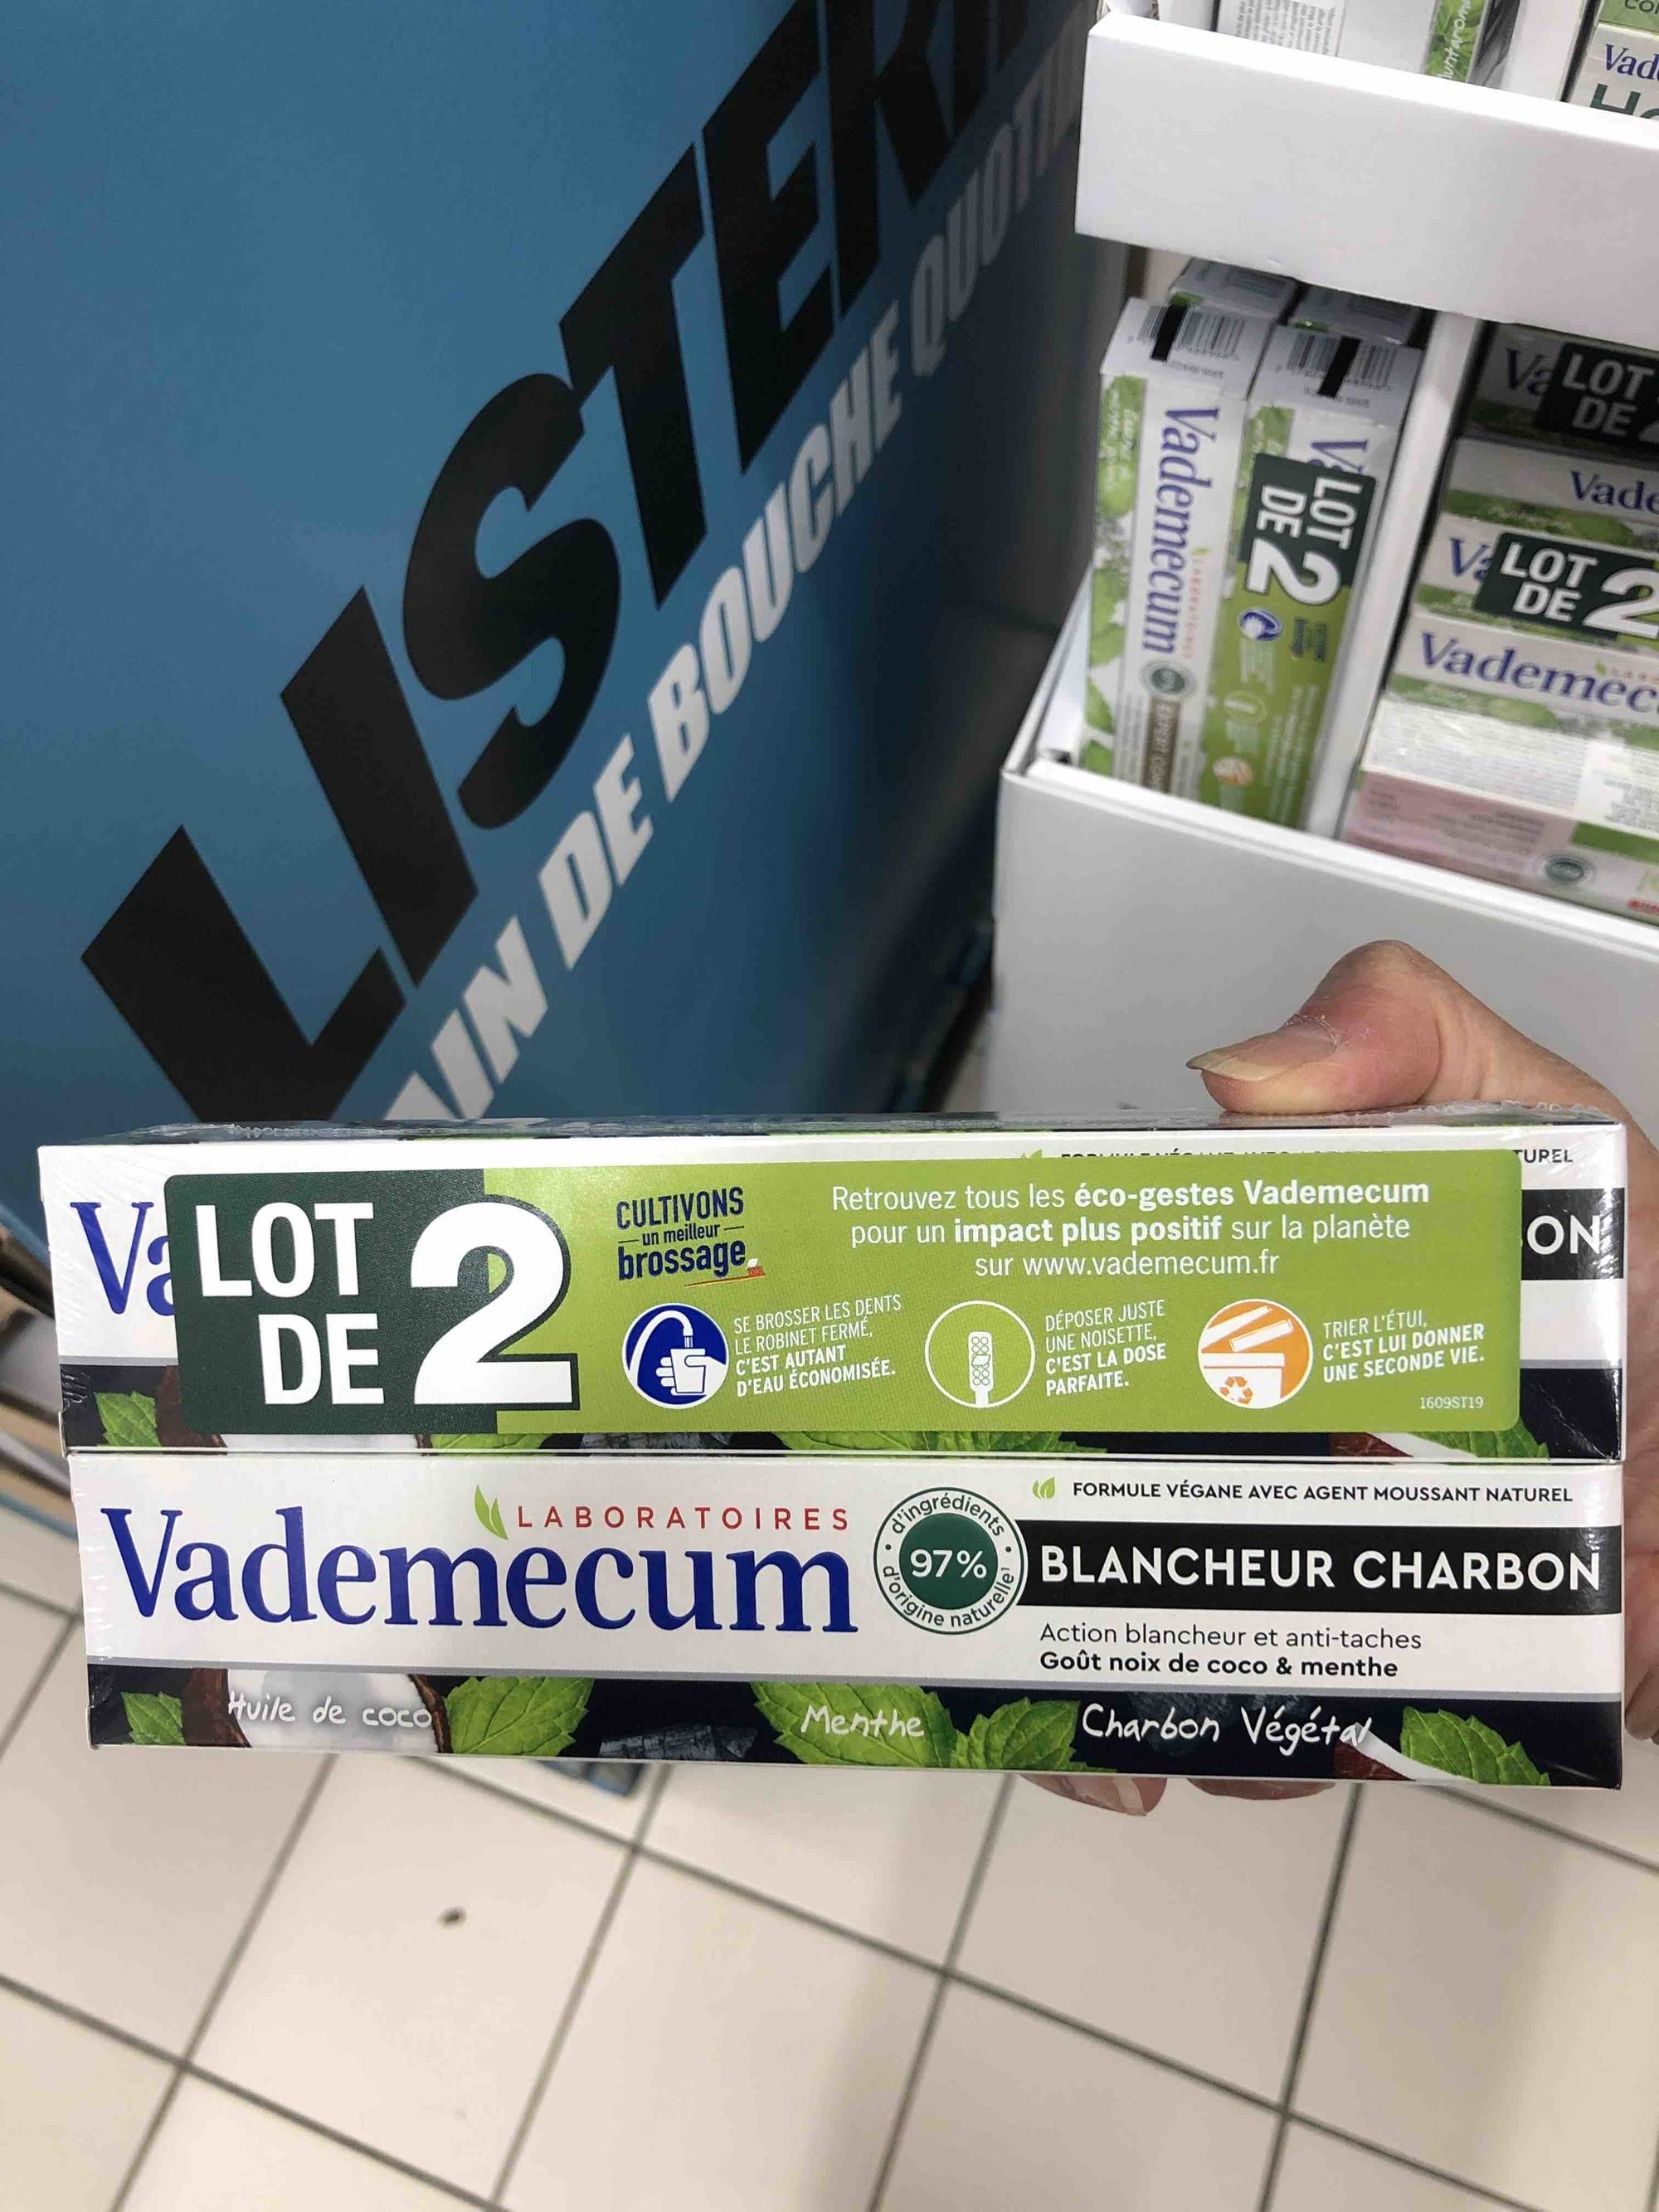 VADEMECUM - Blancheur charbon - Dentifrice